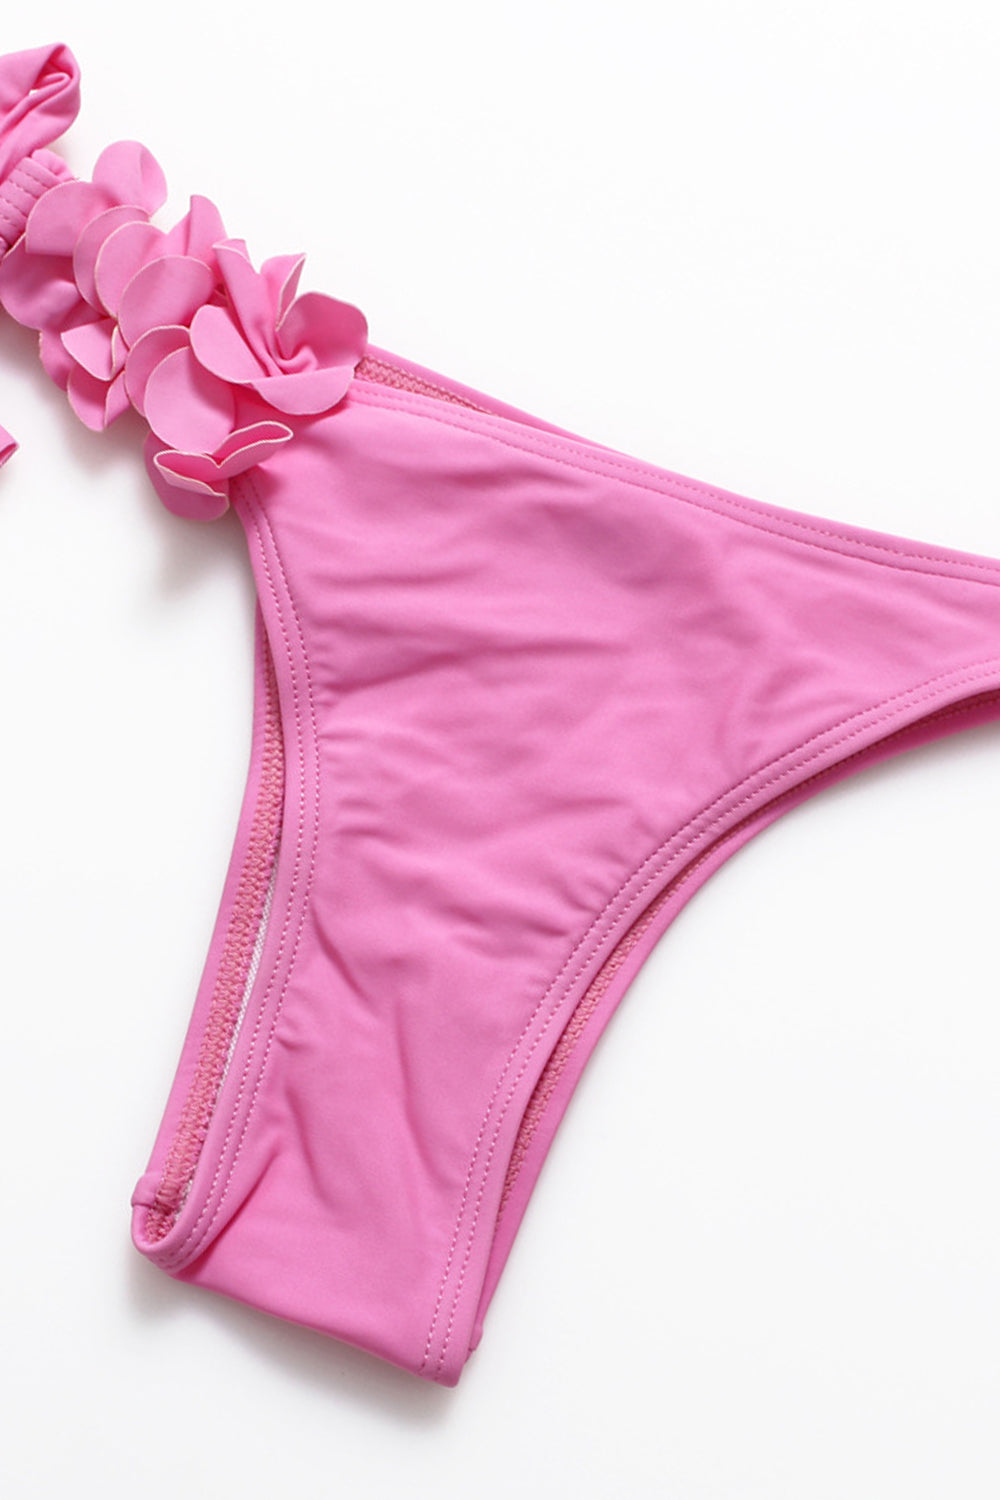 Iyasson Creamy Pink 3D Blooming Flower  Bikini Set